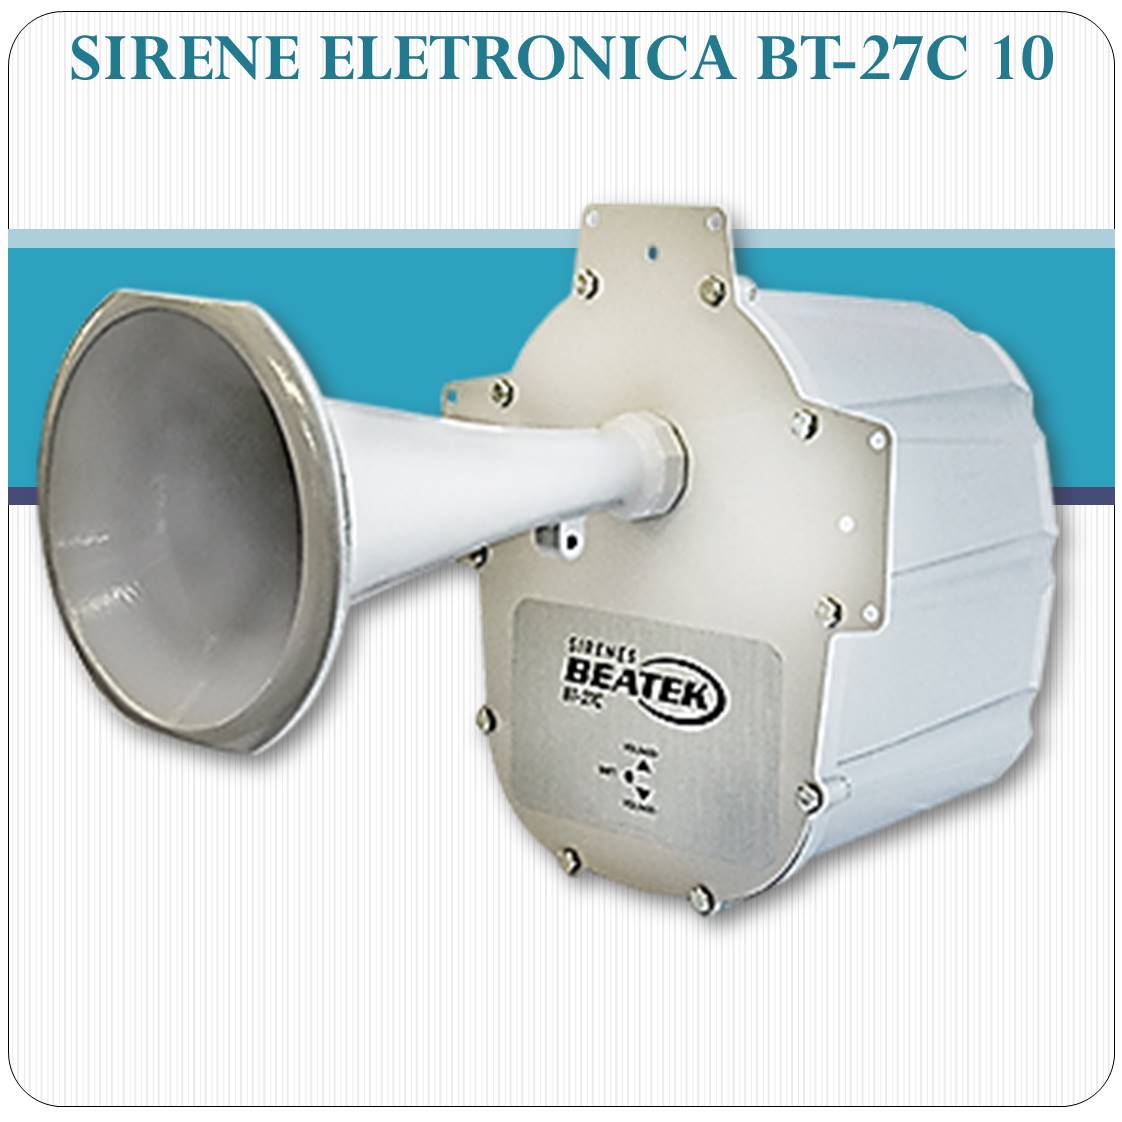 Sirene Eletrônica de Alta Potência BEATEK BT-27C 10